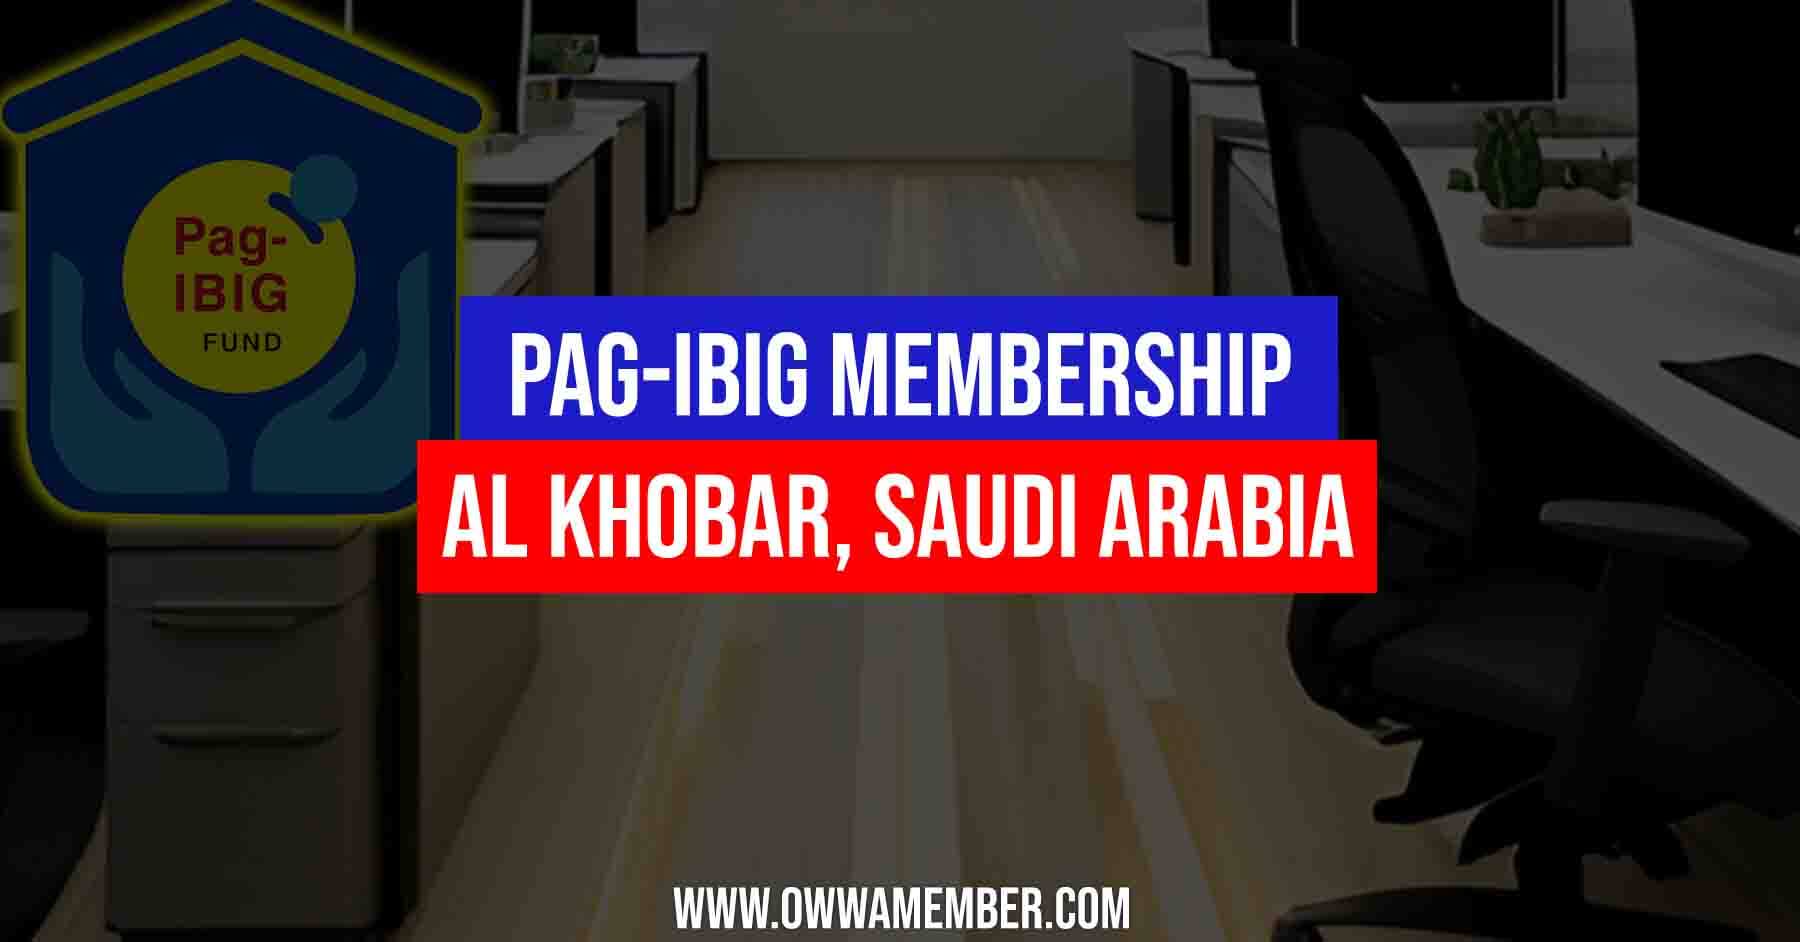 pagibig membership application in al khobar saudi arabia